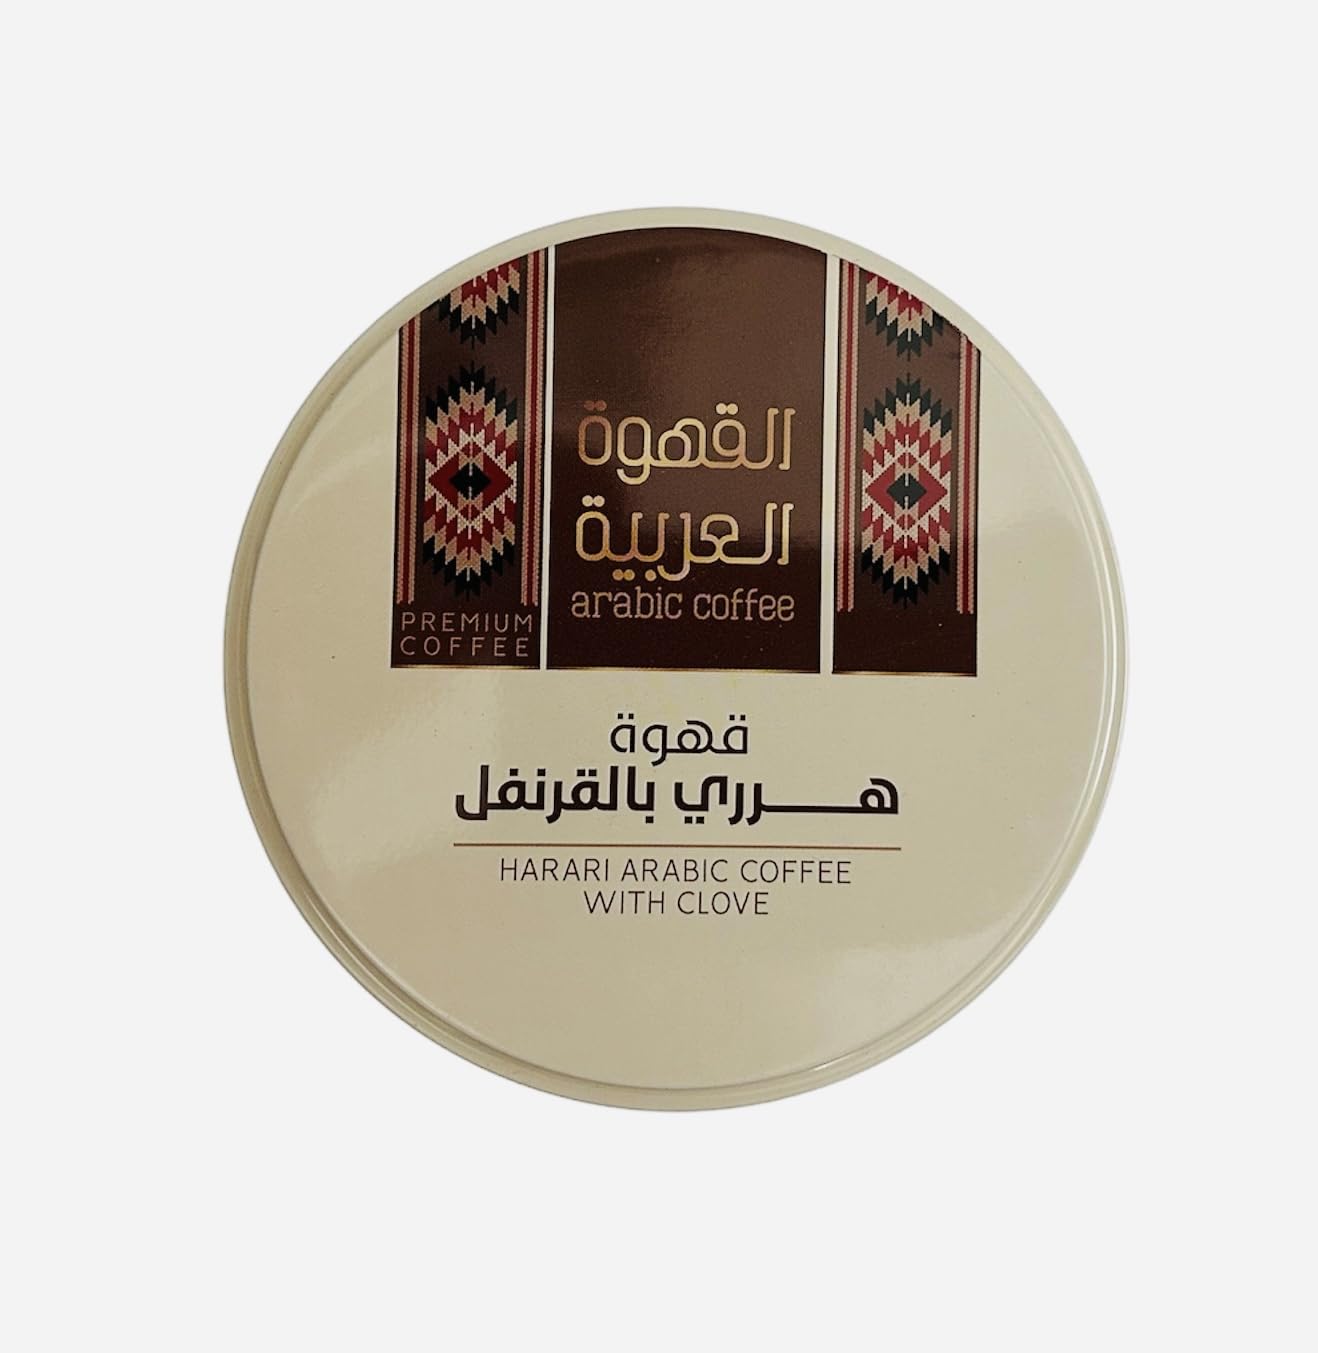 ARABIC COFFEE Ground | Premium Saudia Coffee | 250 gm 0.55 lb 8.8 oz | From Madinah Saudi Arabia (HARARI with CLOVE)